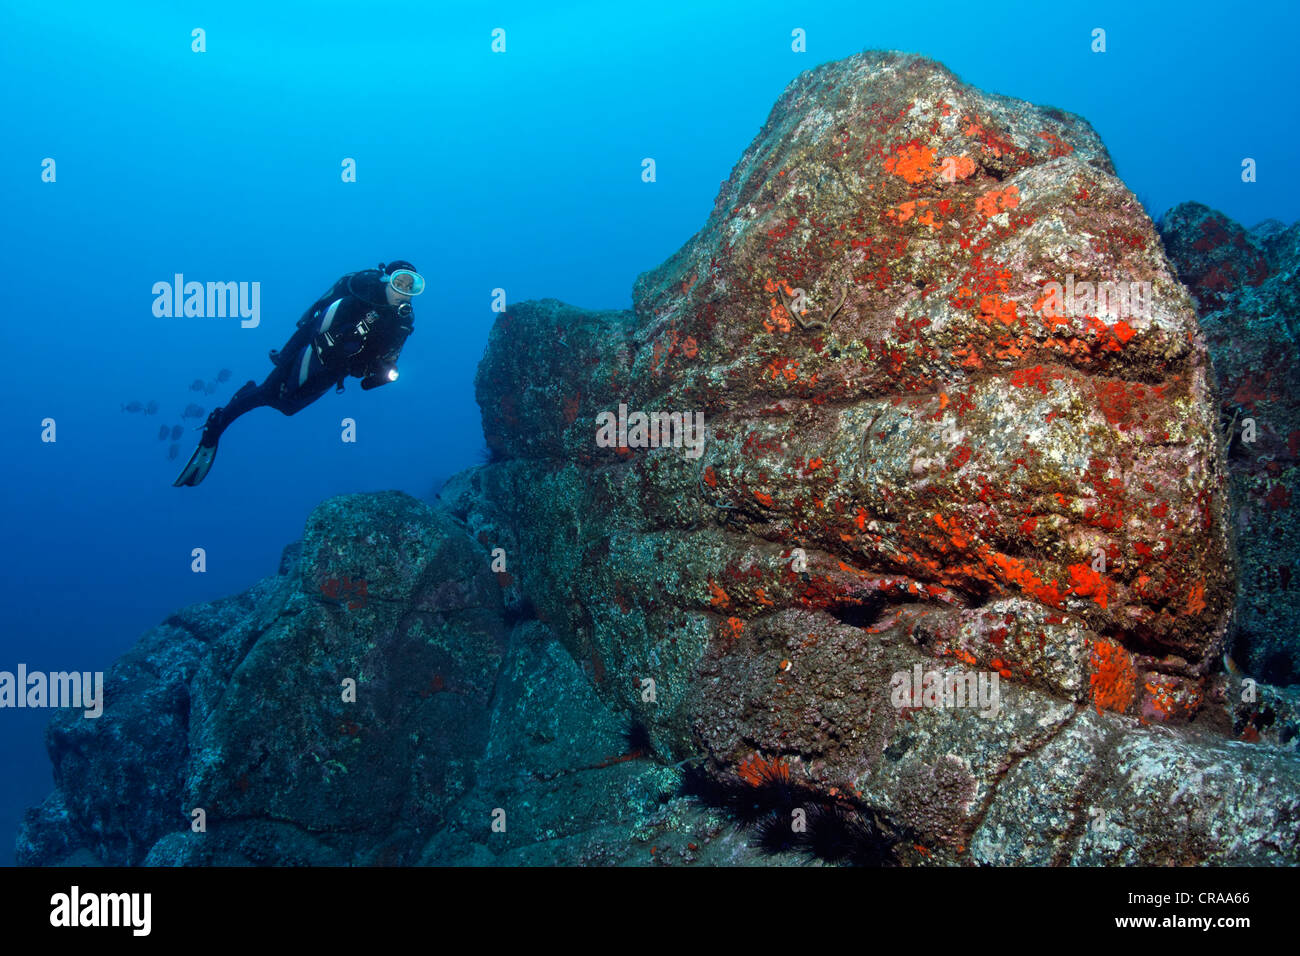 Scuba diver observing a rock overgrown with Common Sponge (Crambe crambe) and Acorn Barnacles (Balanus trigonus), Madeira Stock Photo